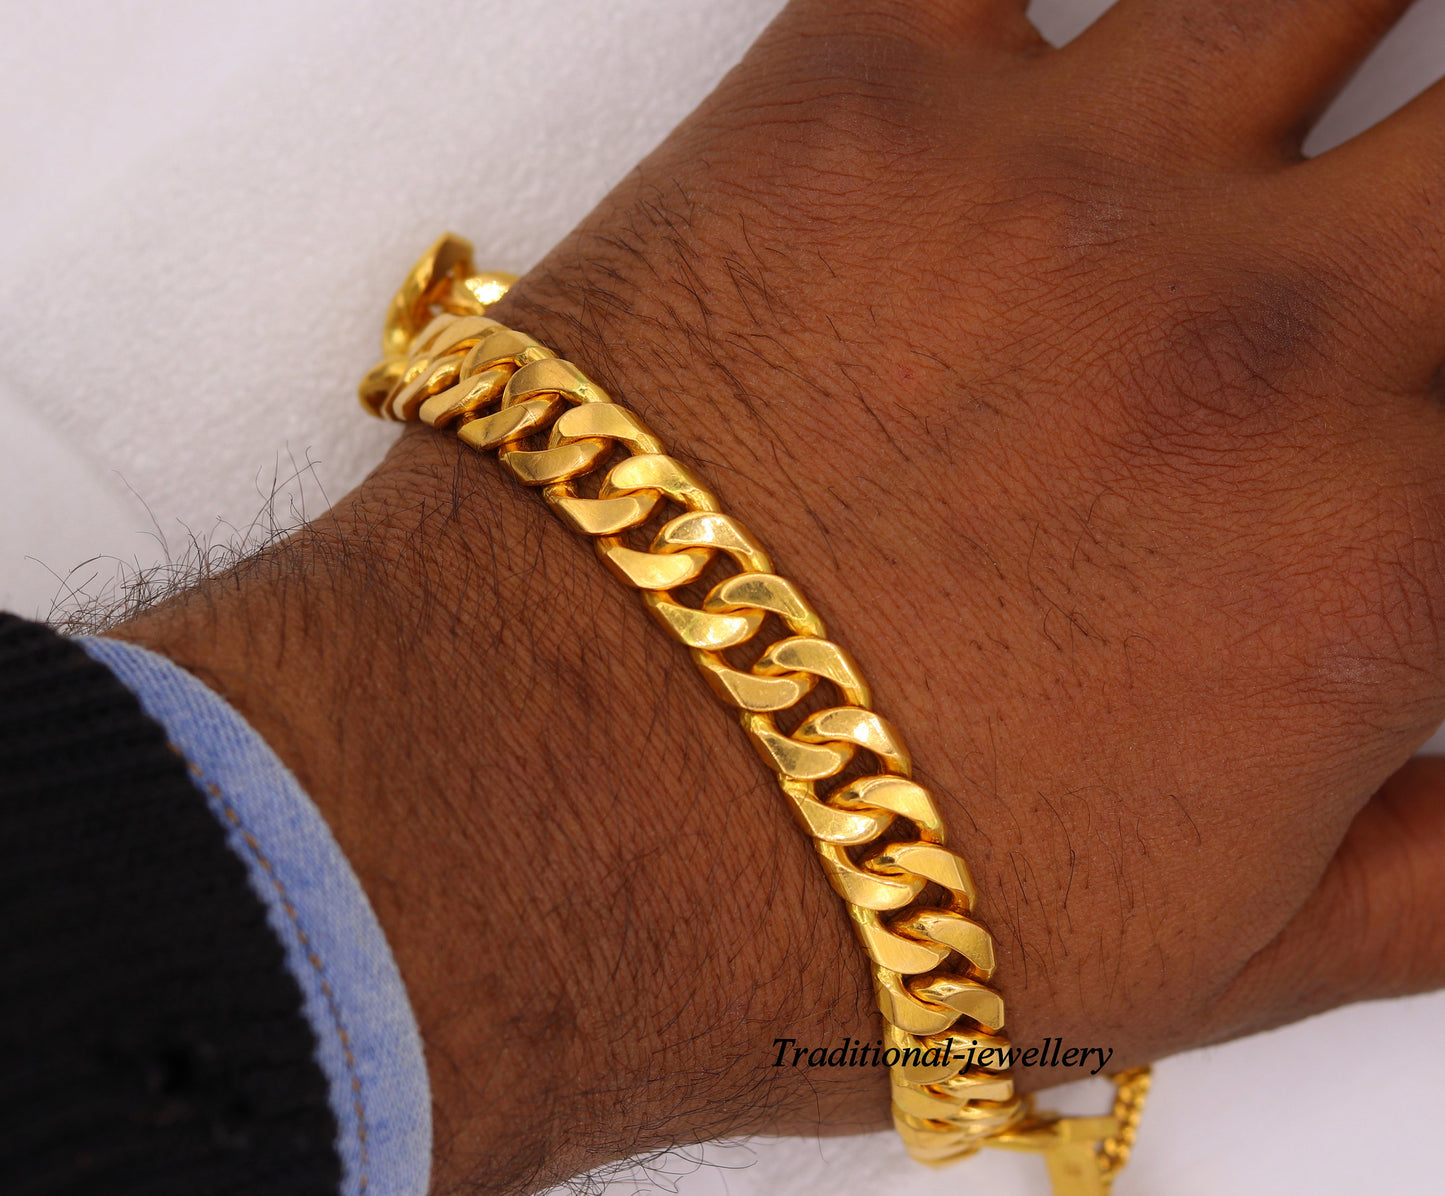 Vintage Om Aum 22kt yellow gold handmade solid gold curb cuban link chain bracelet fabulous men's jewelry br22 - TRIBAL ORNAMENTS